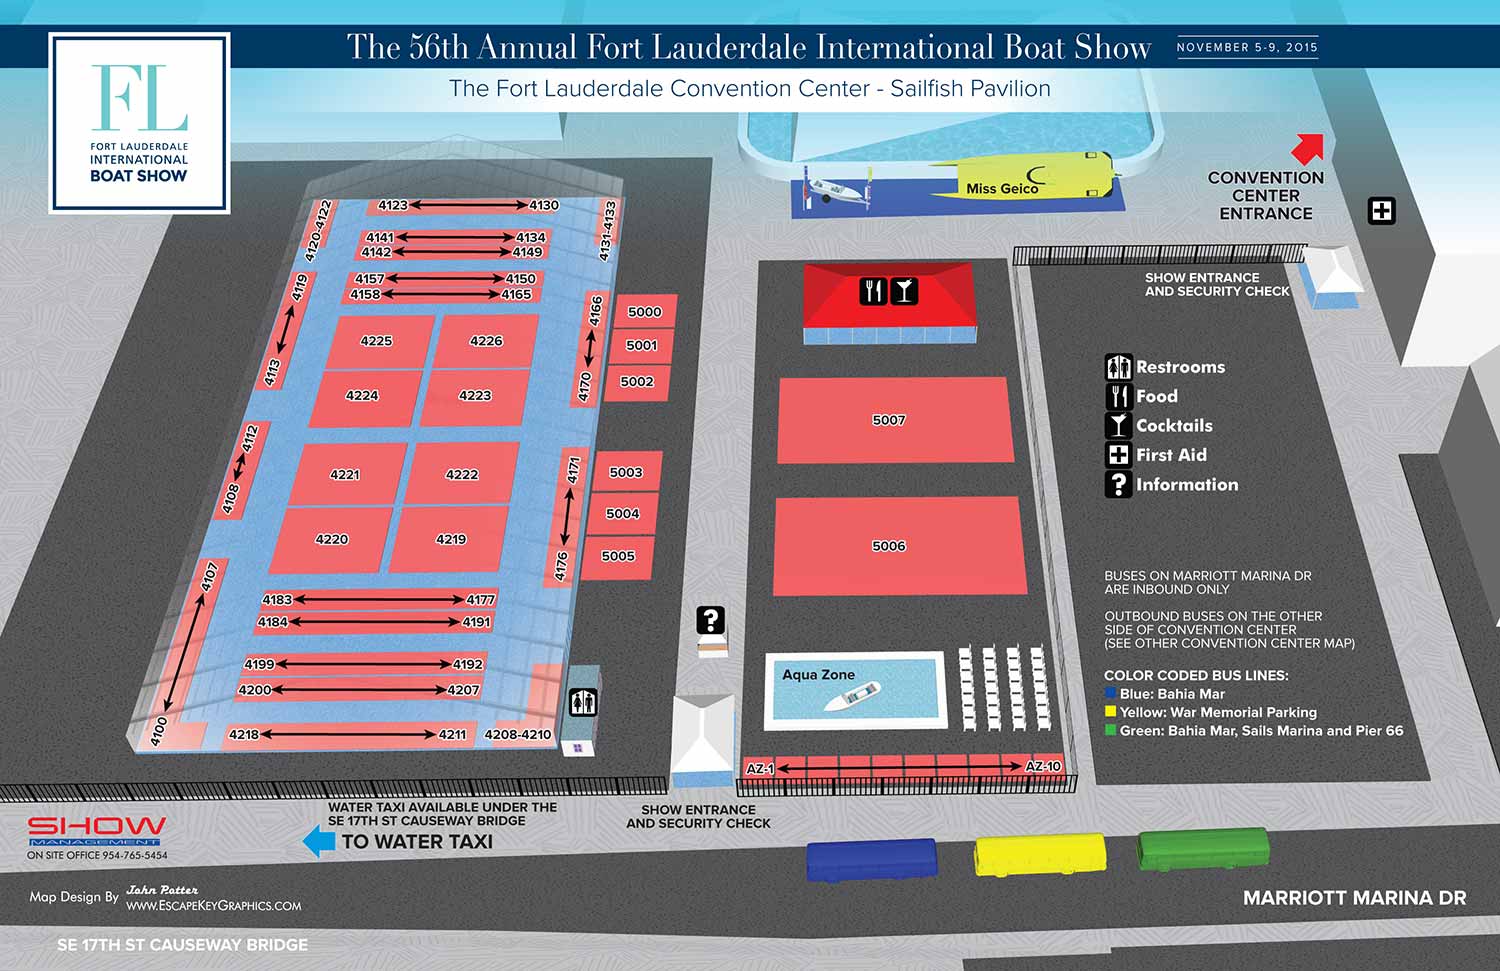 Fort Lauderdale International Boat Show - Broward County Convention Center Sailfish Pavilion Map